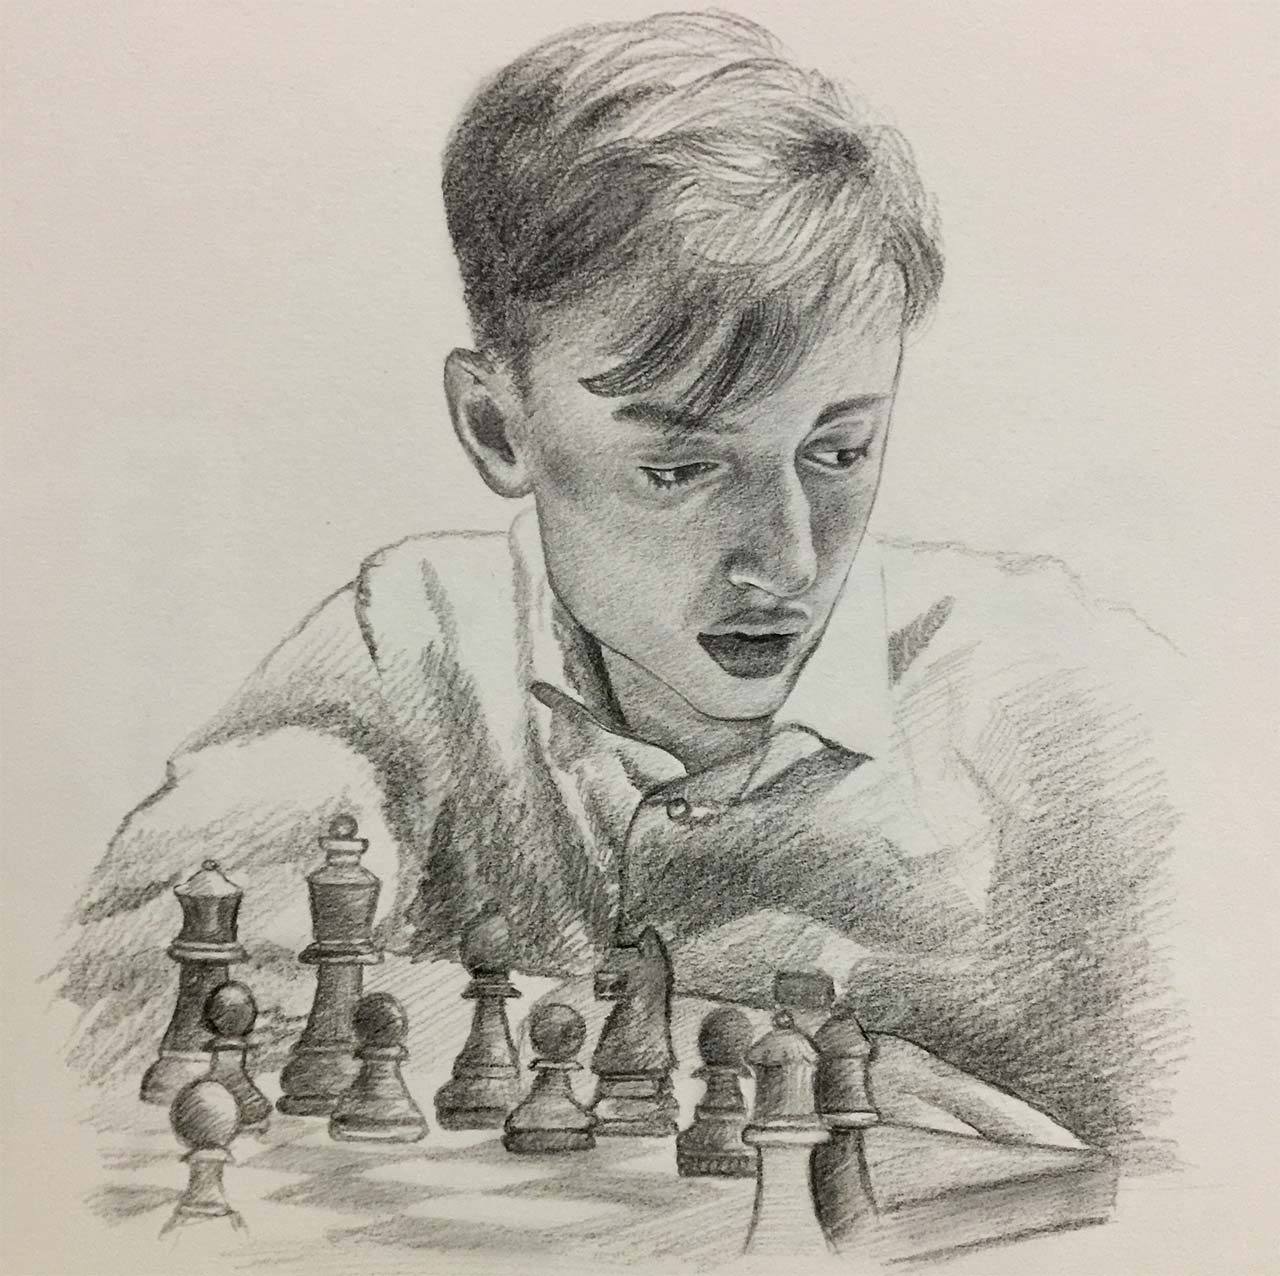 Daniil Dubov - Meet The Russian Chess Wizard and Super Grandmaster